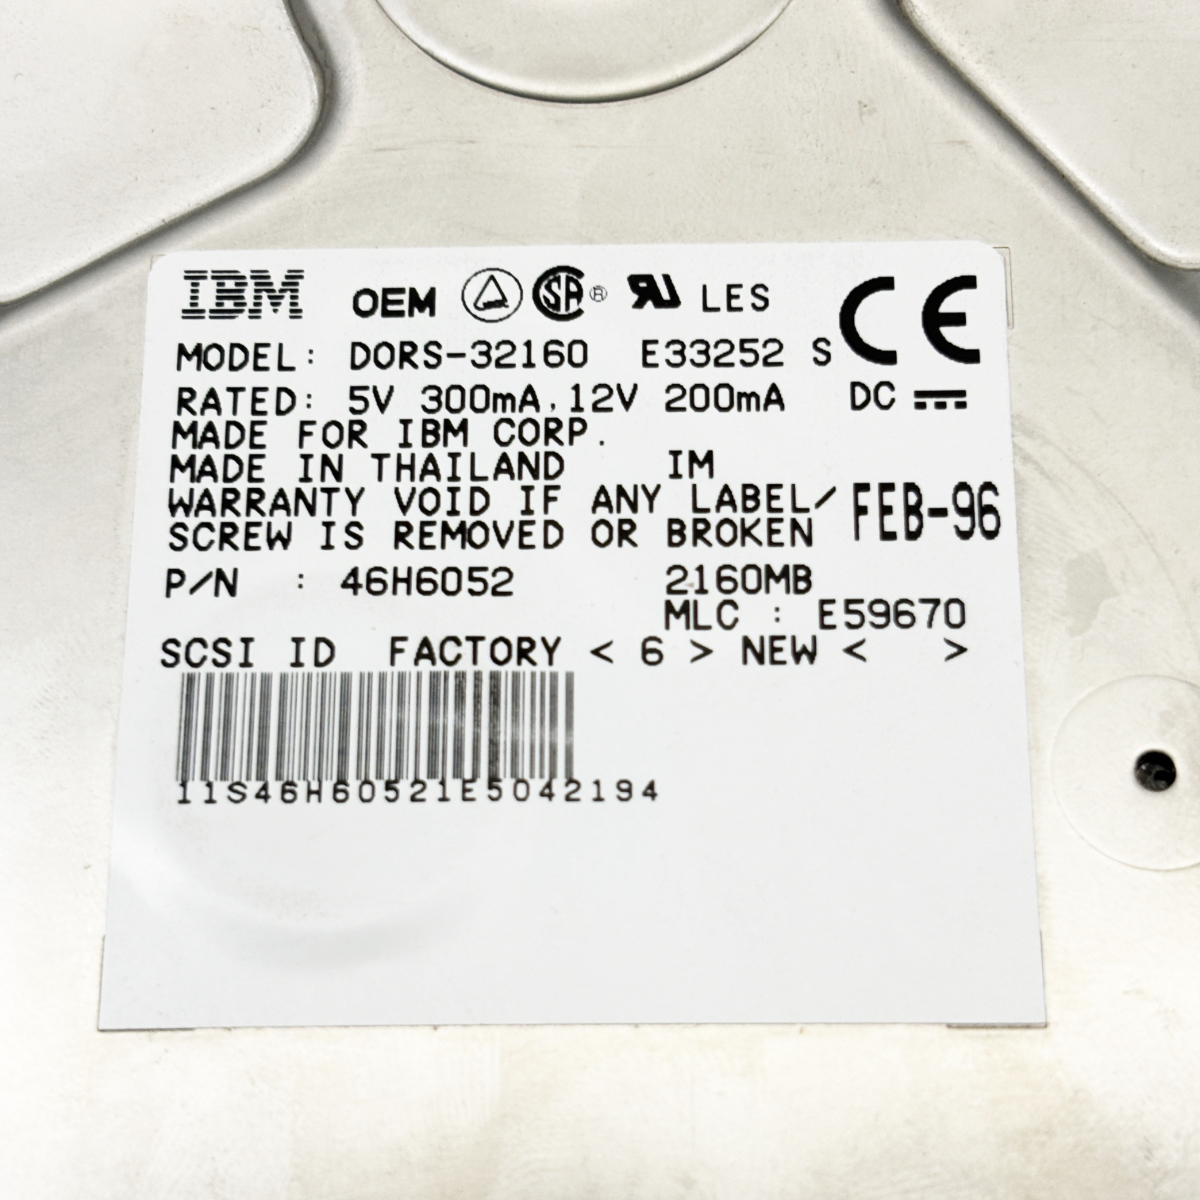 [ IBM ] IBM DORS-32160 3.5 -inch 2GB SCSI HDD [ used * free shipping ]